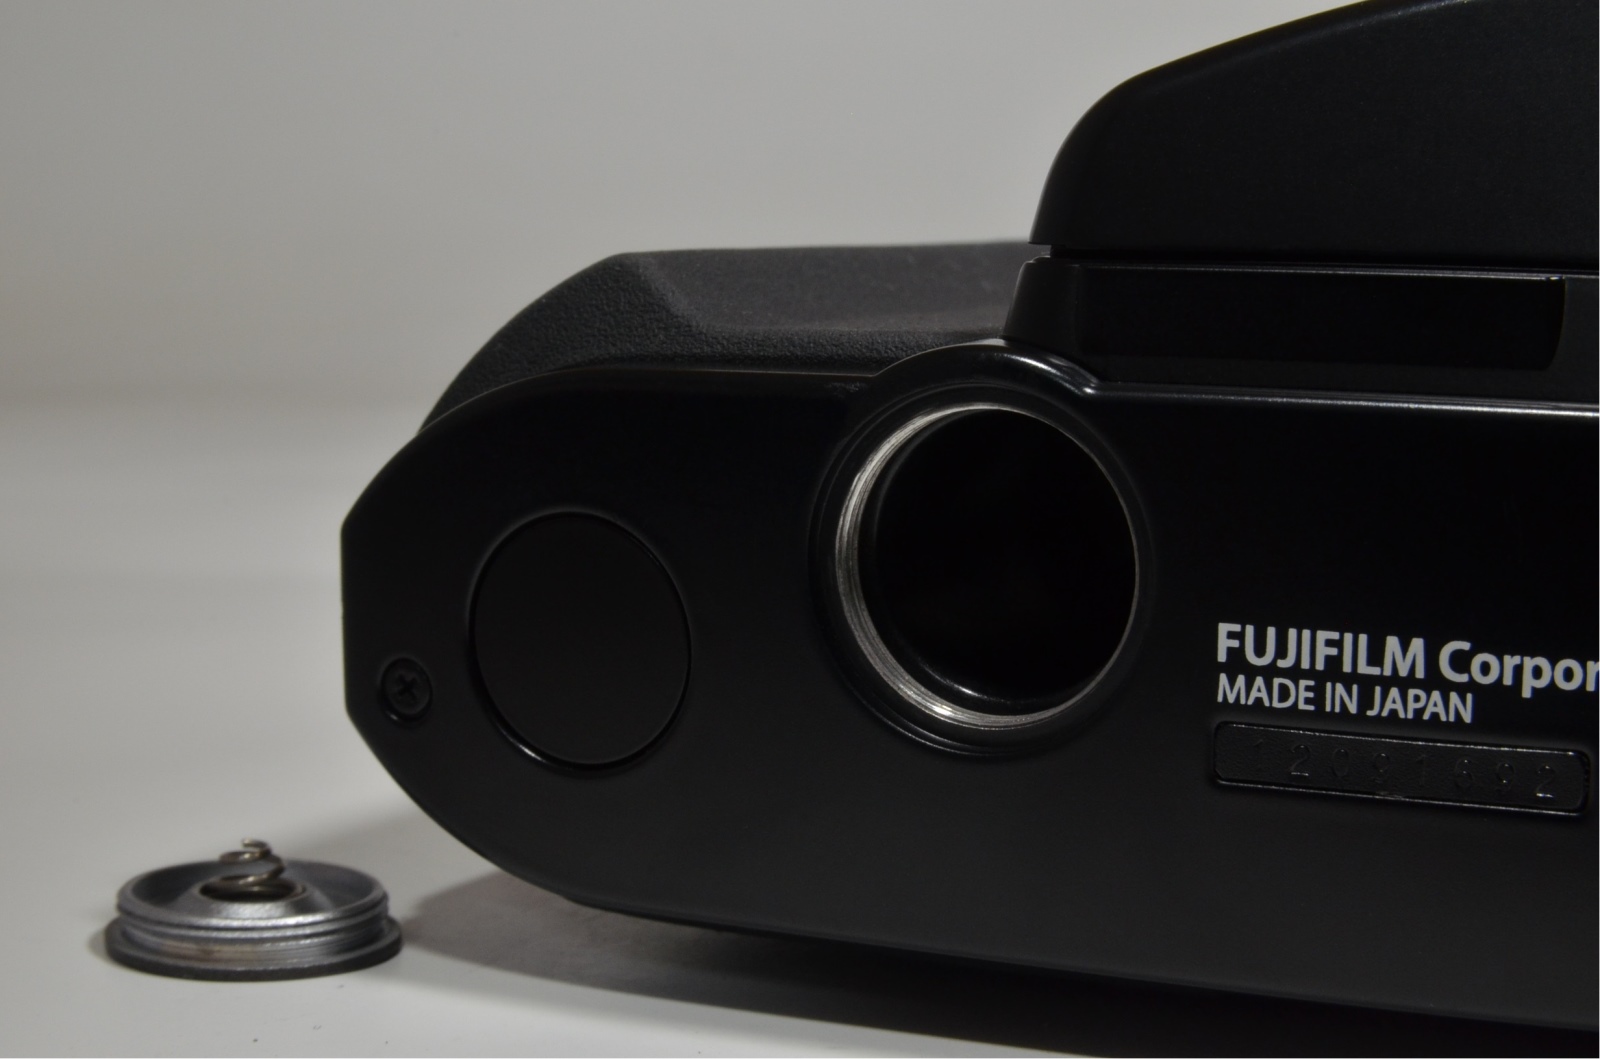 fujifilm gf670 professional black fujinon 80mm f3.5